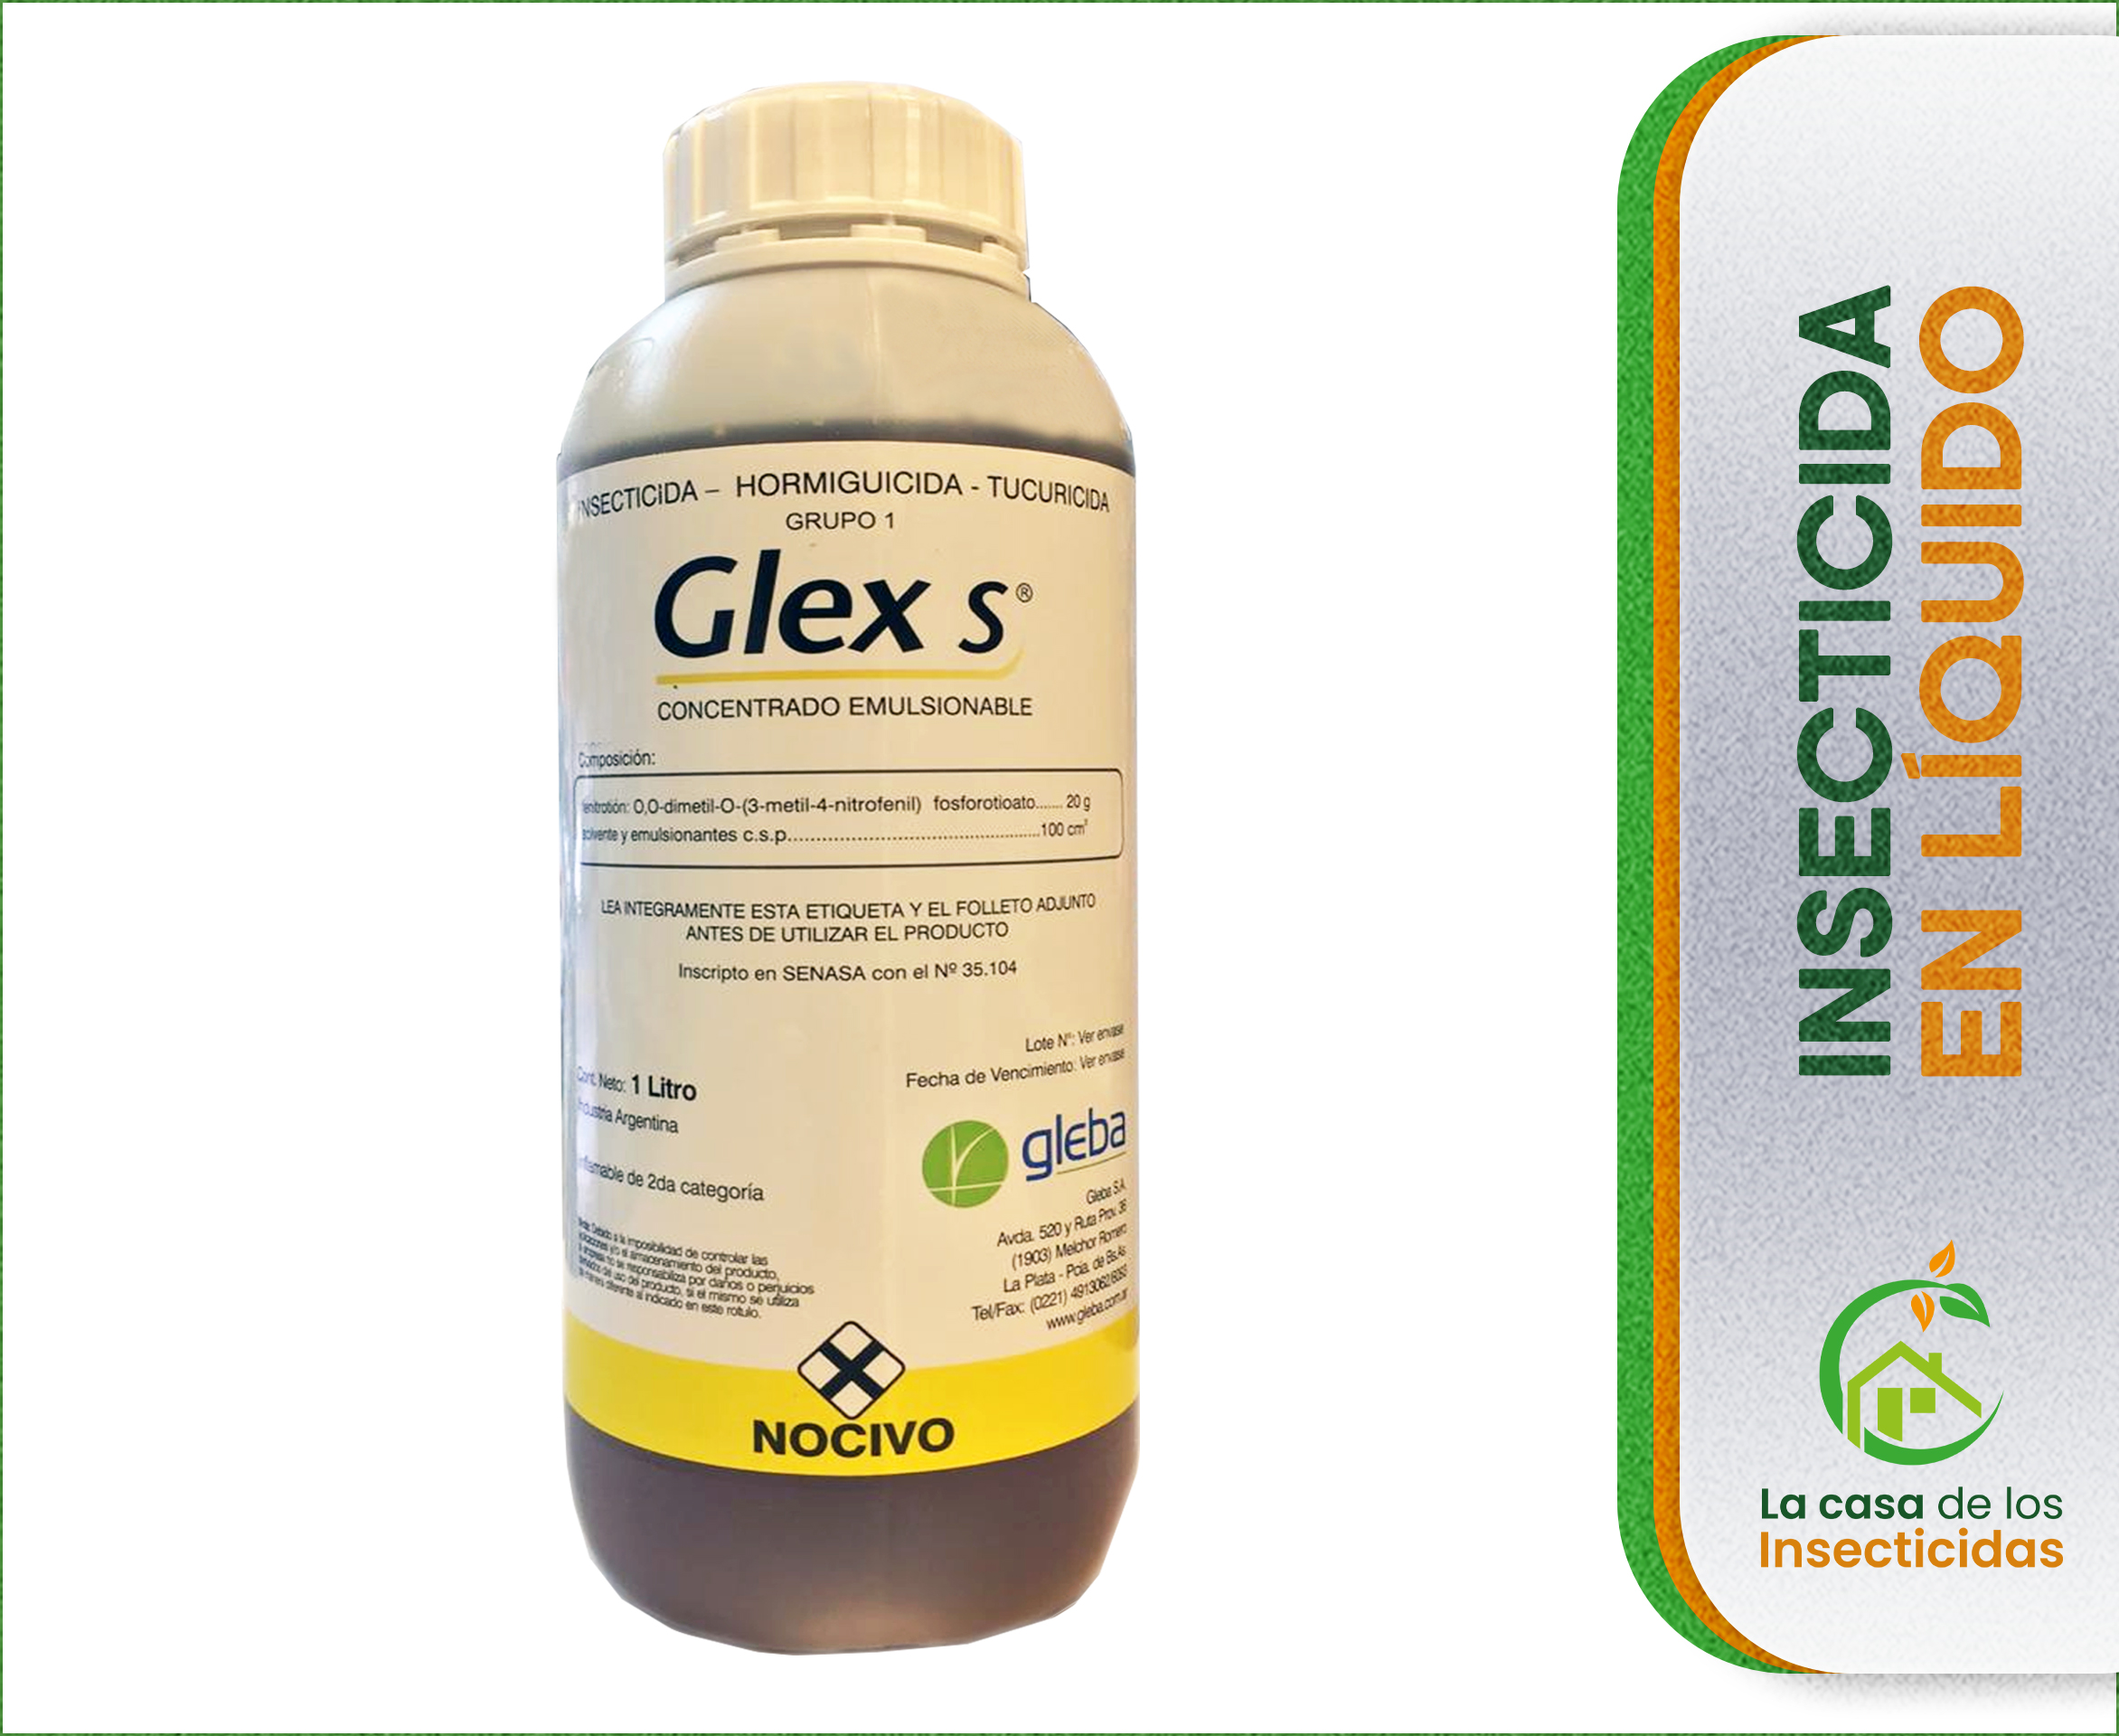 Glex S Hormiguicida insecticida control de hormigas 1Lt